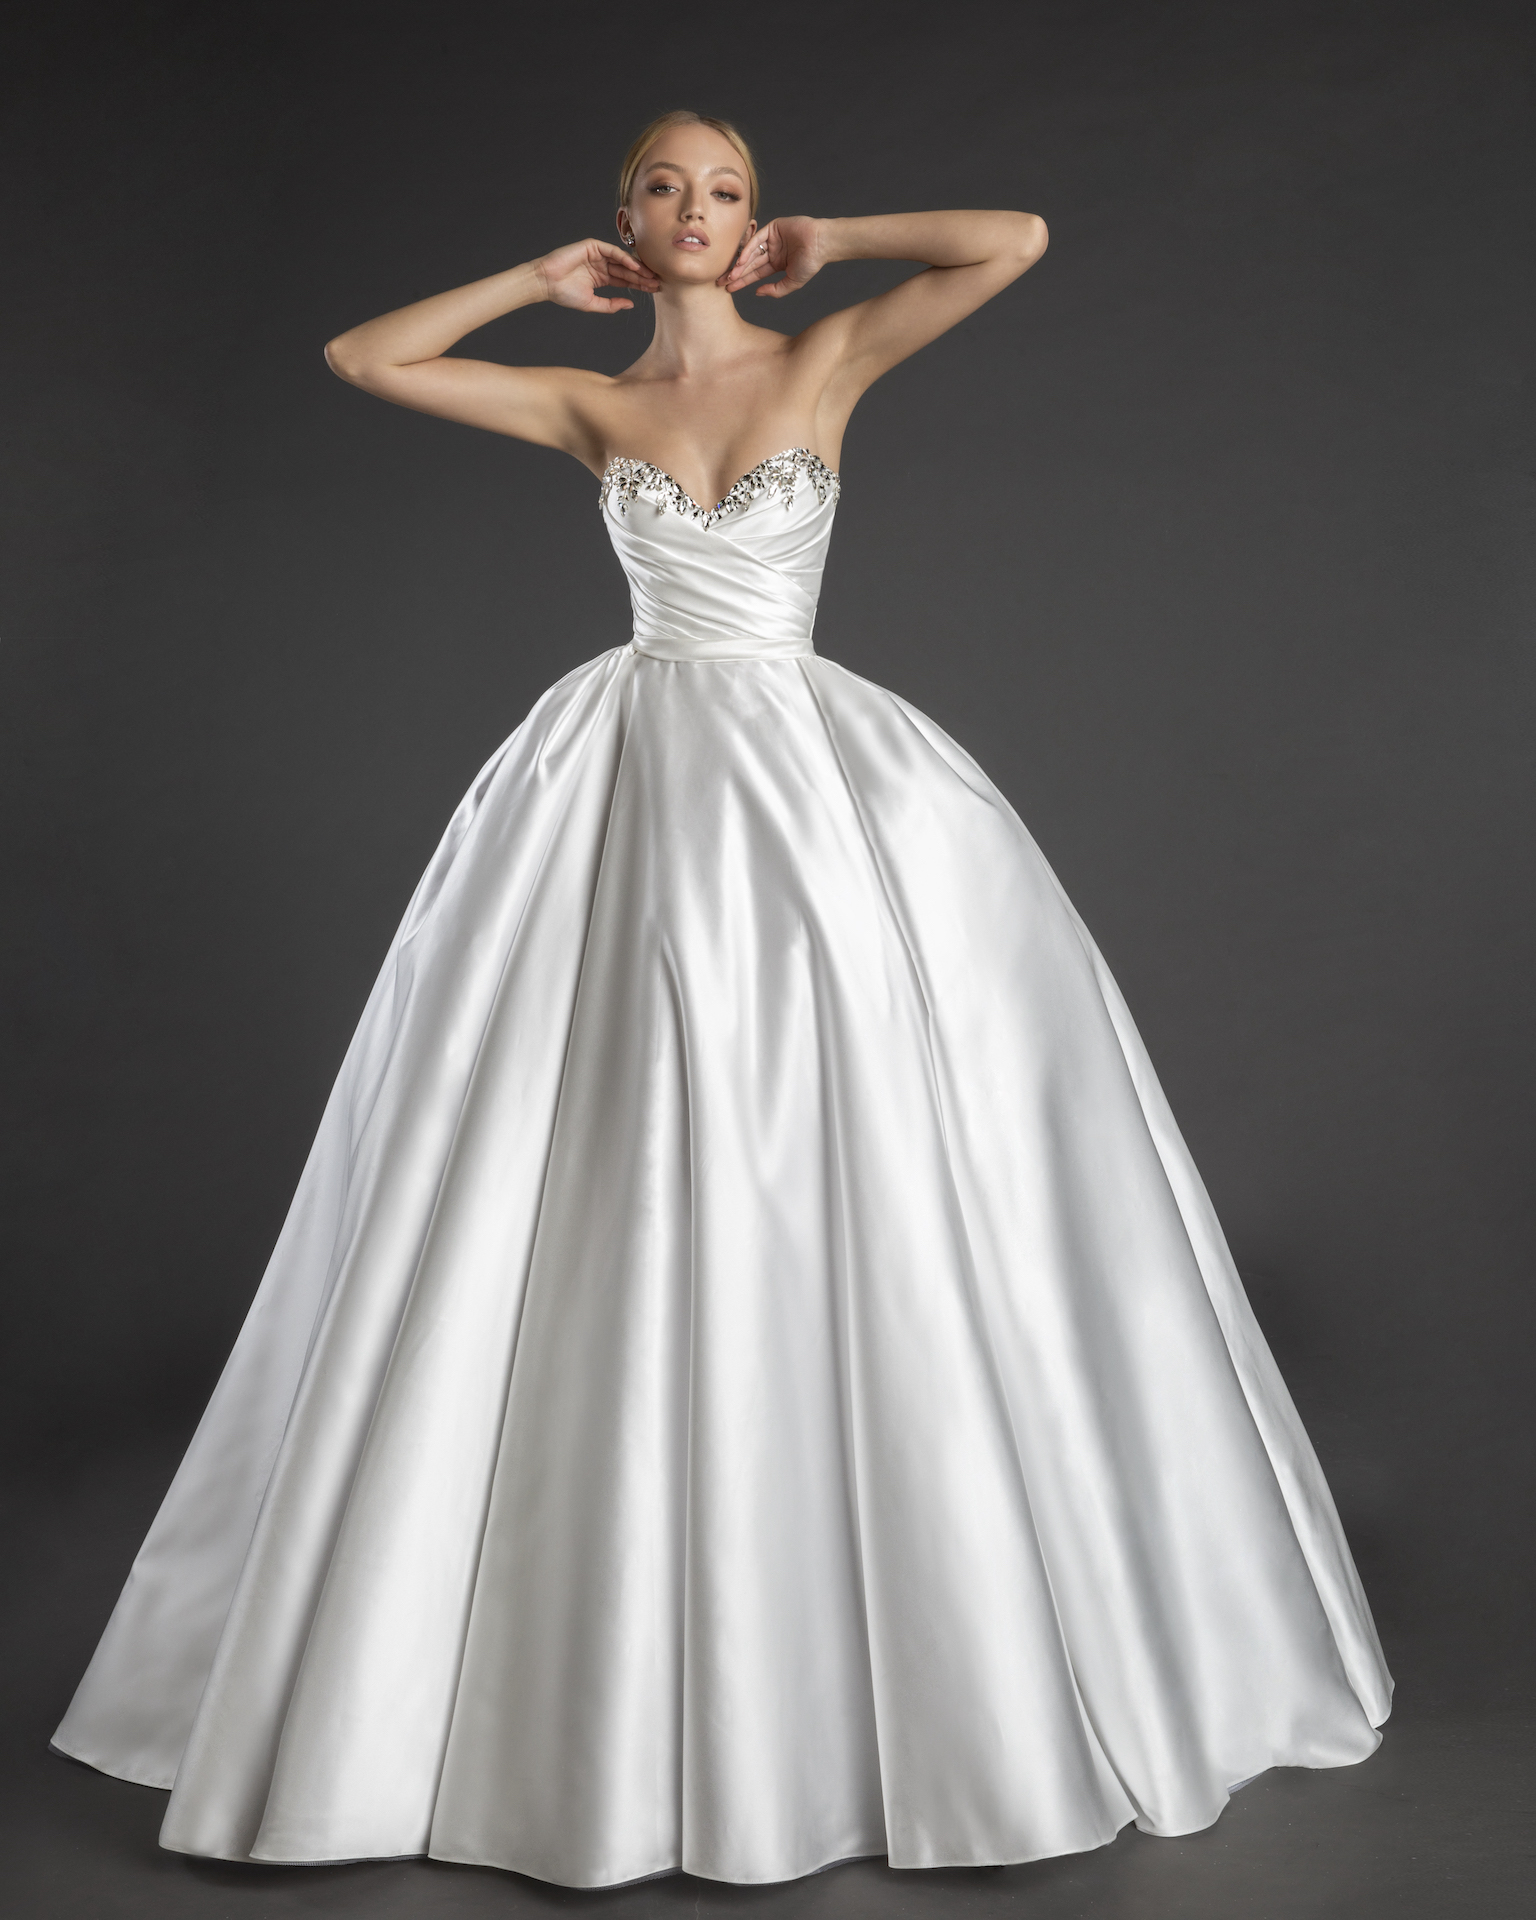 Sweetheart Neckline Strapless Satin Ball Gown Wedding Dress With Crystals Kleinfeld Bridal 1398